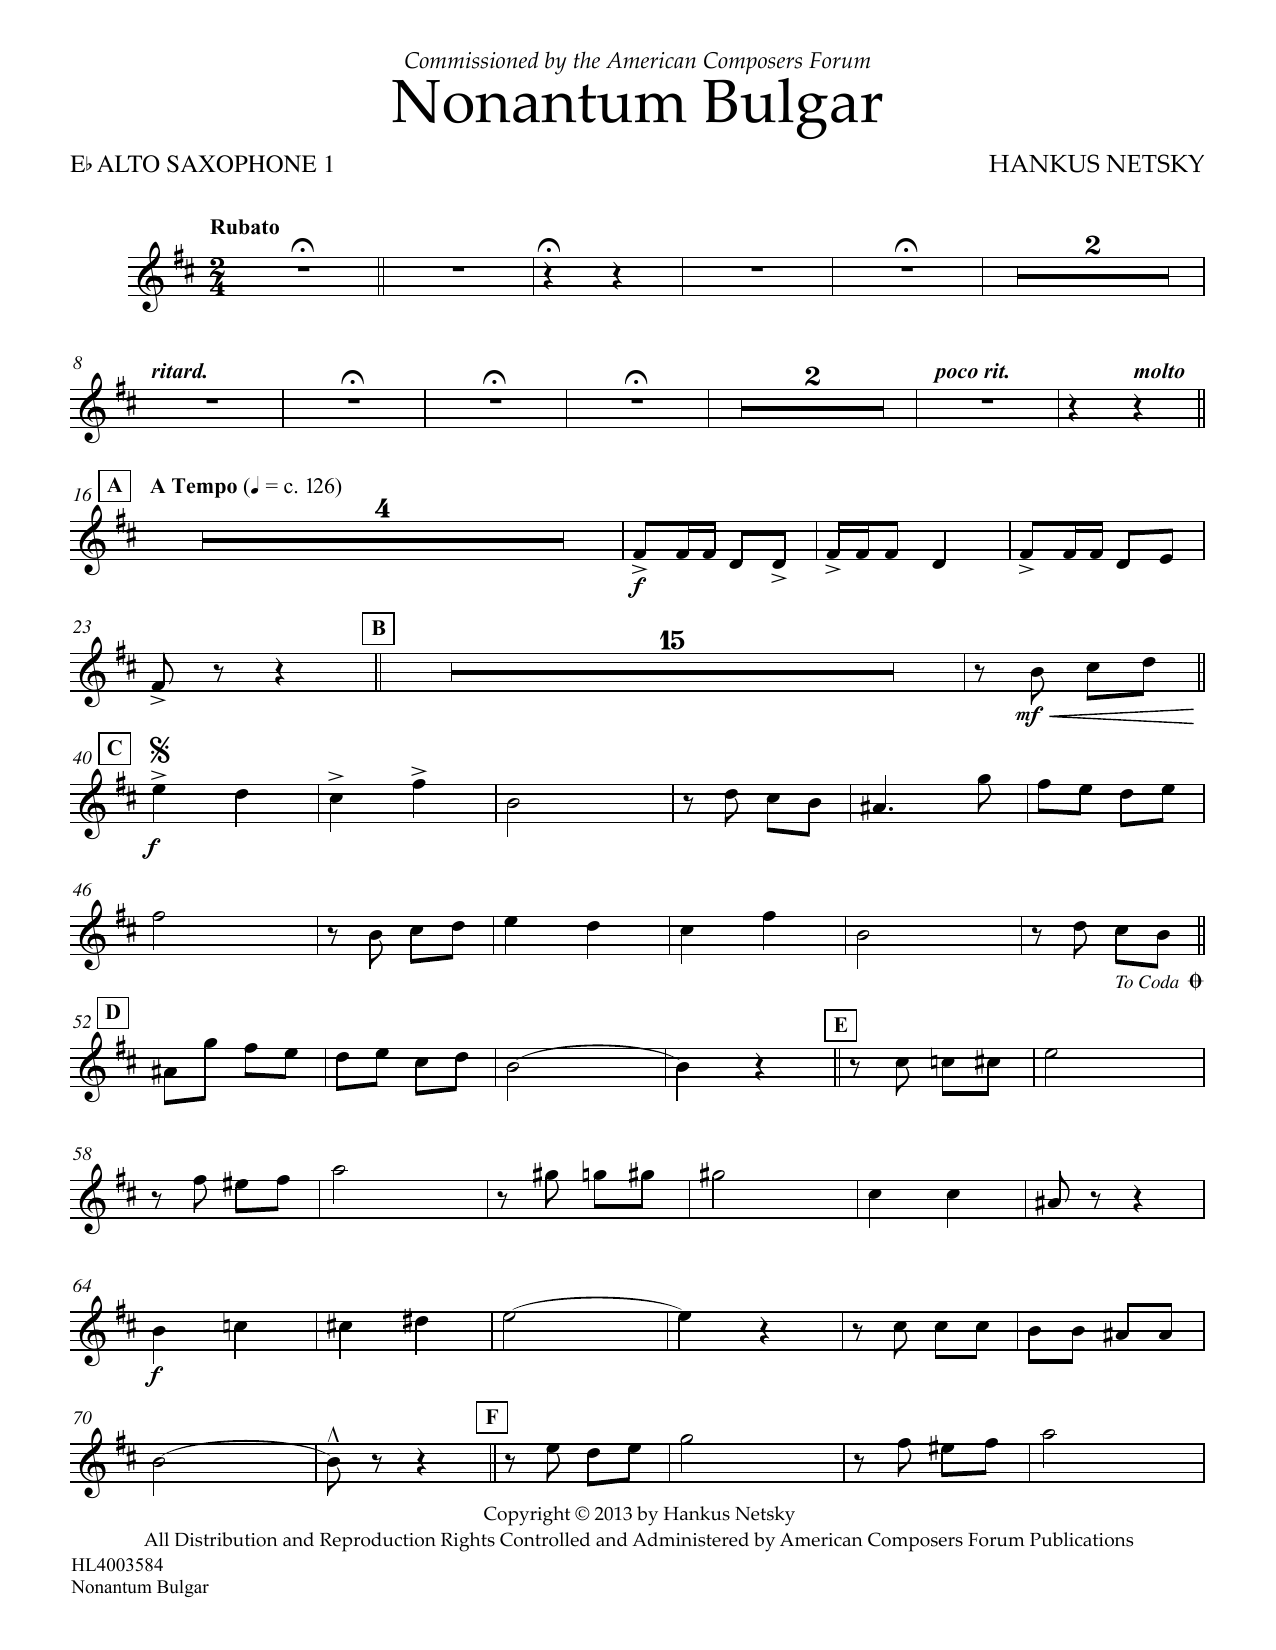 Download Hankus Netsky Nonantum Bulgar - Eb Alto Saxophone 1 Sheet Music and learn how to play Concert Band PDF digital score in minutes